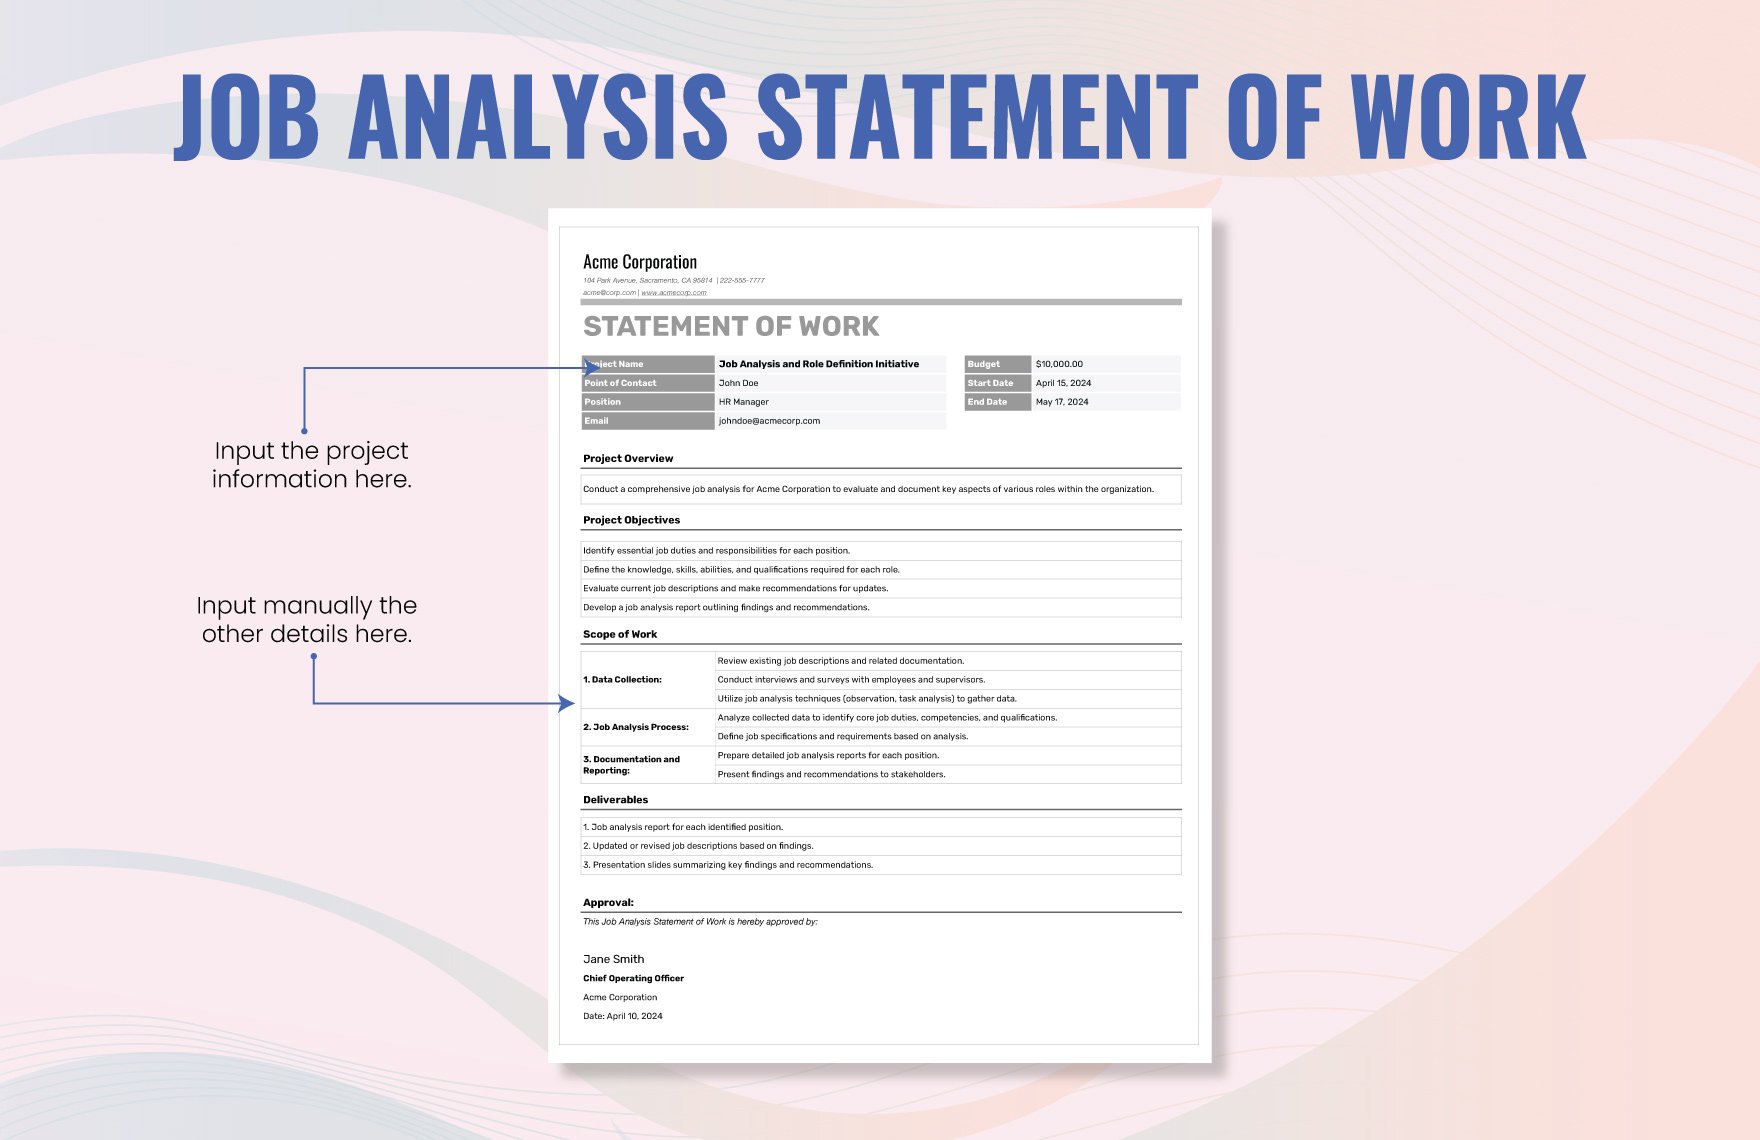 Job Analysis Statement of Work Template